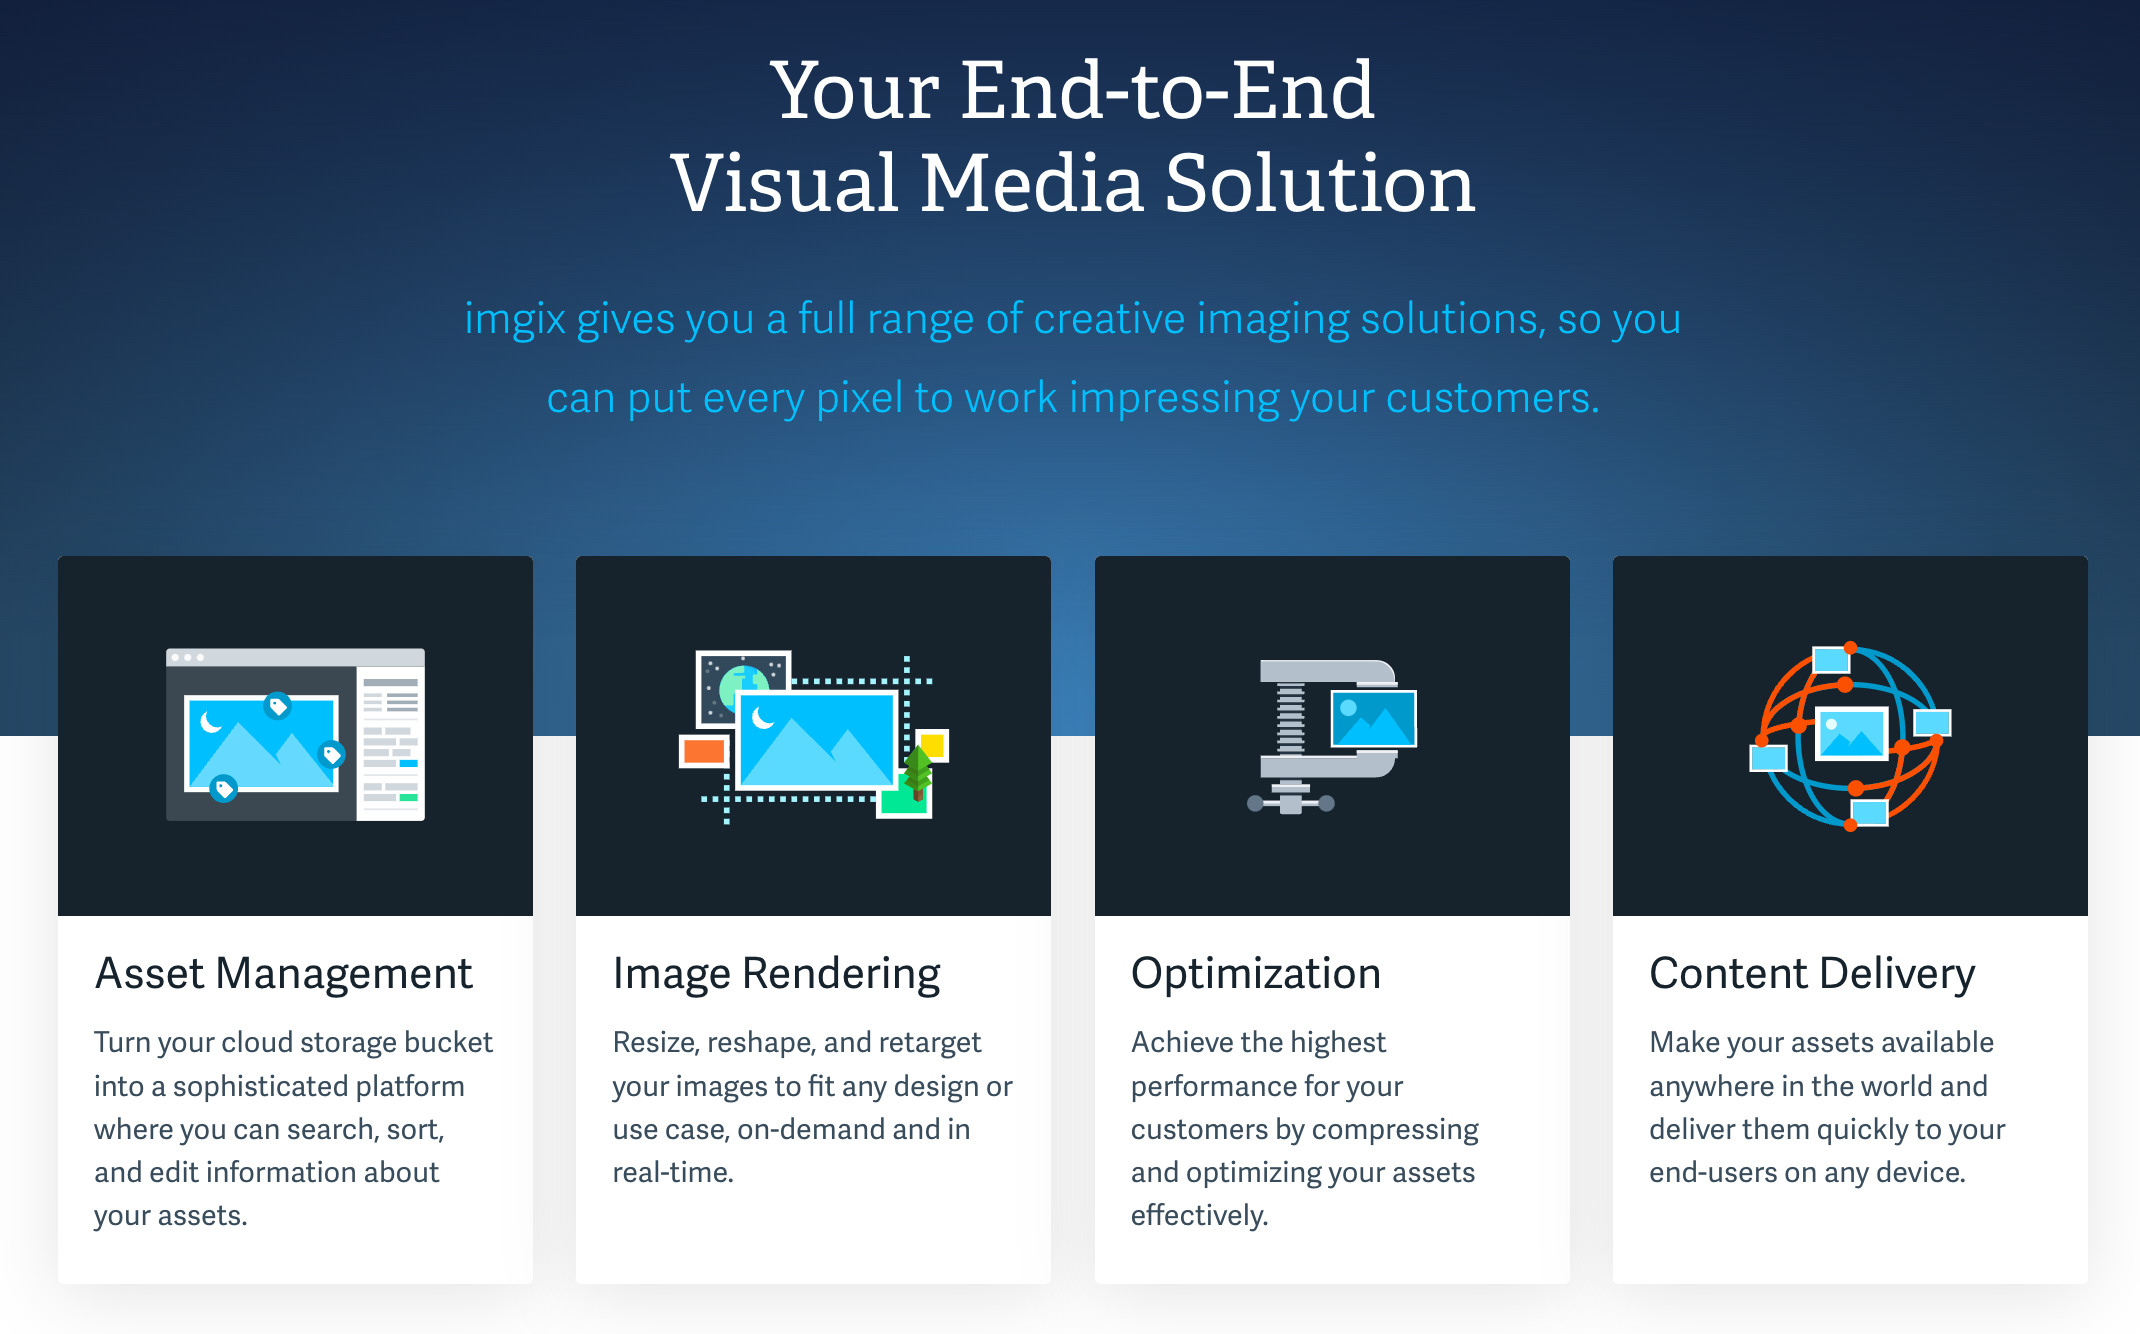 imgix visual media platform